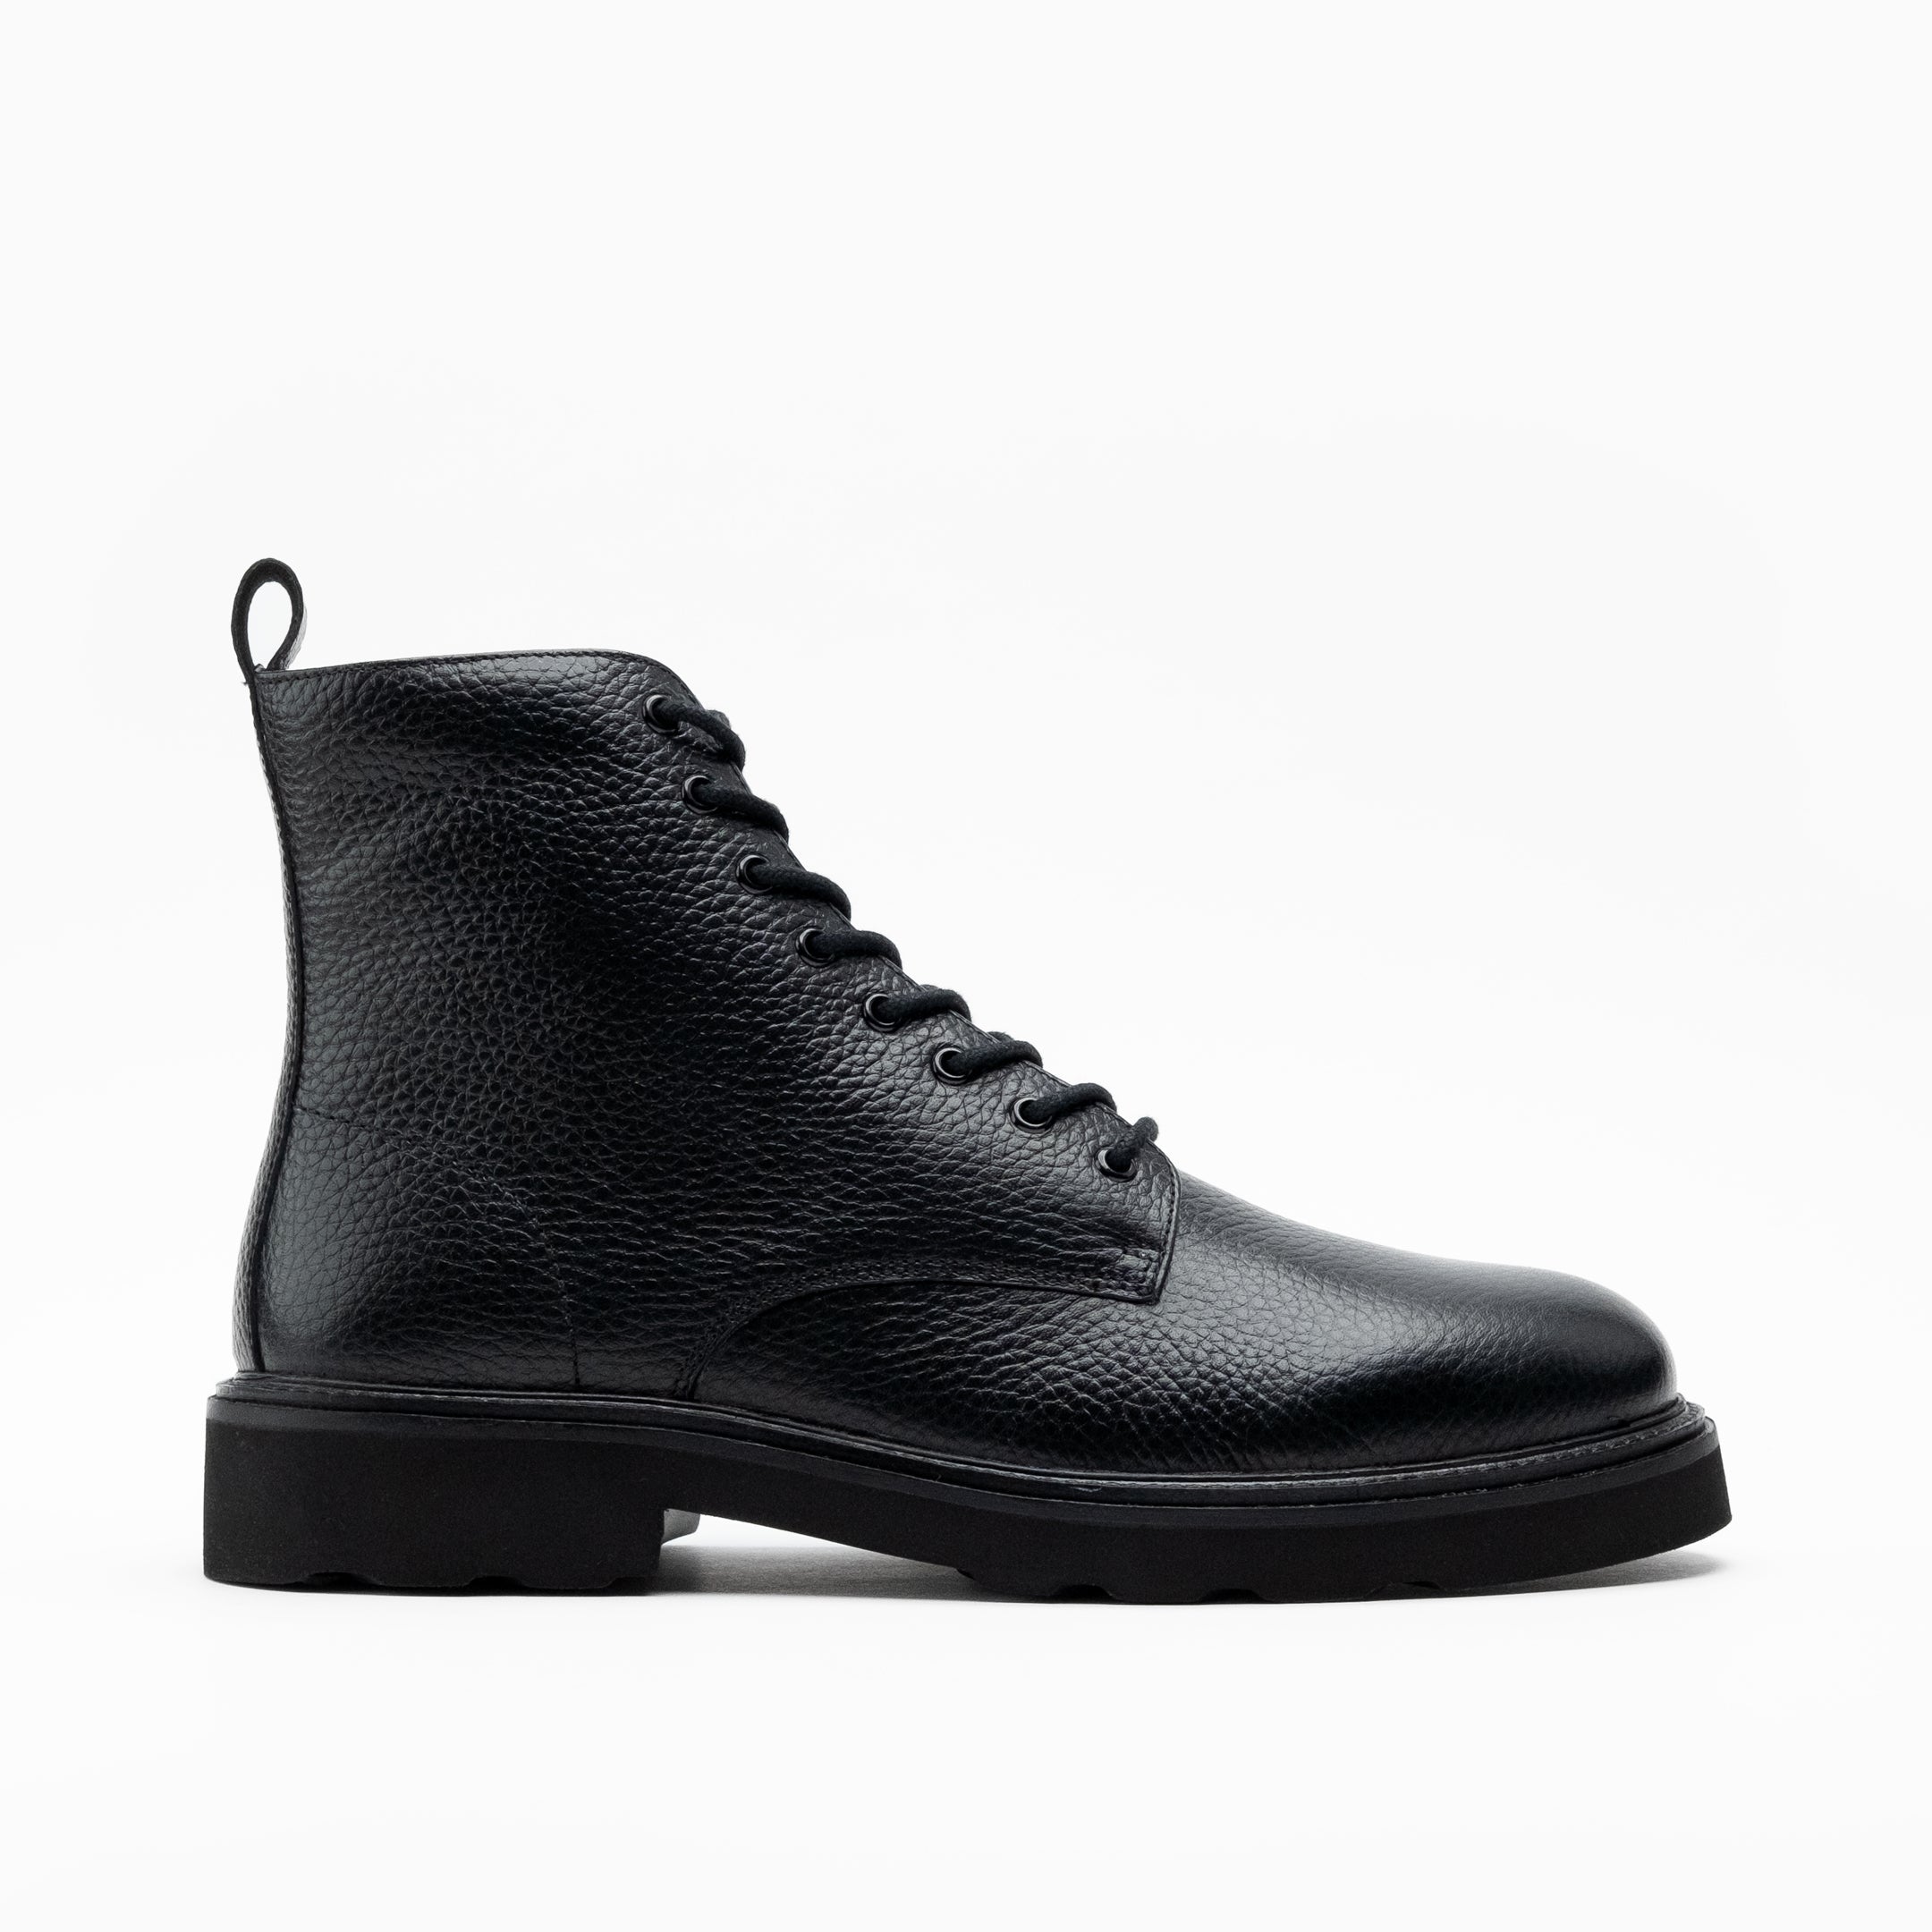 Walk London Mens Max Lace Boot in Black Grain Leather